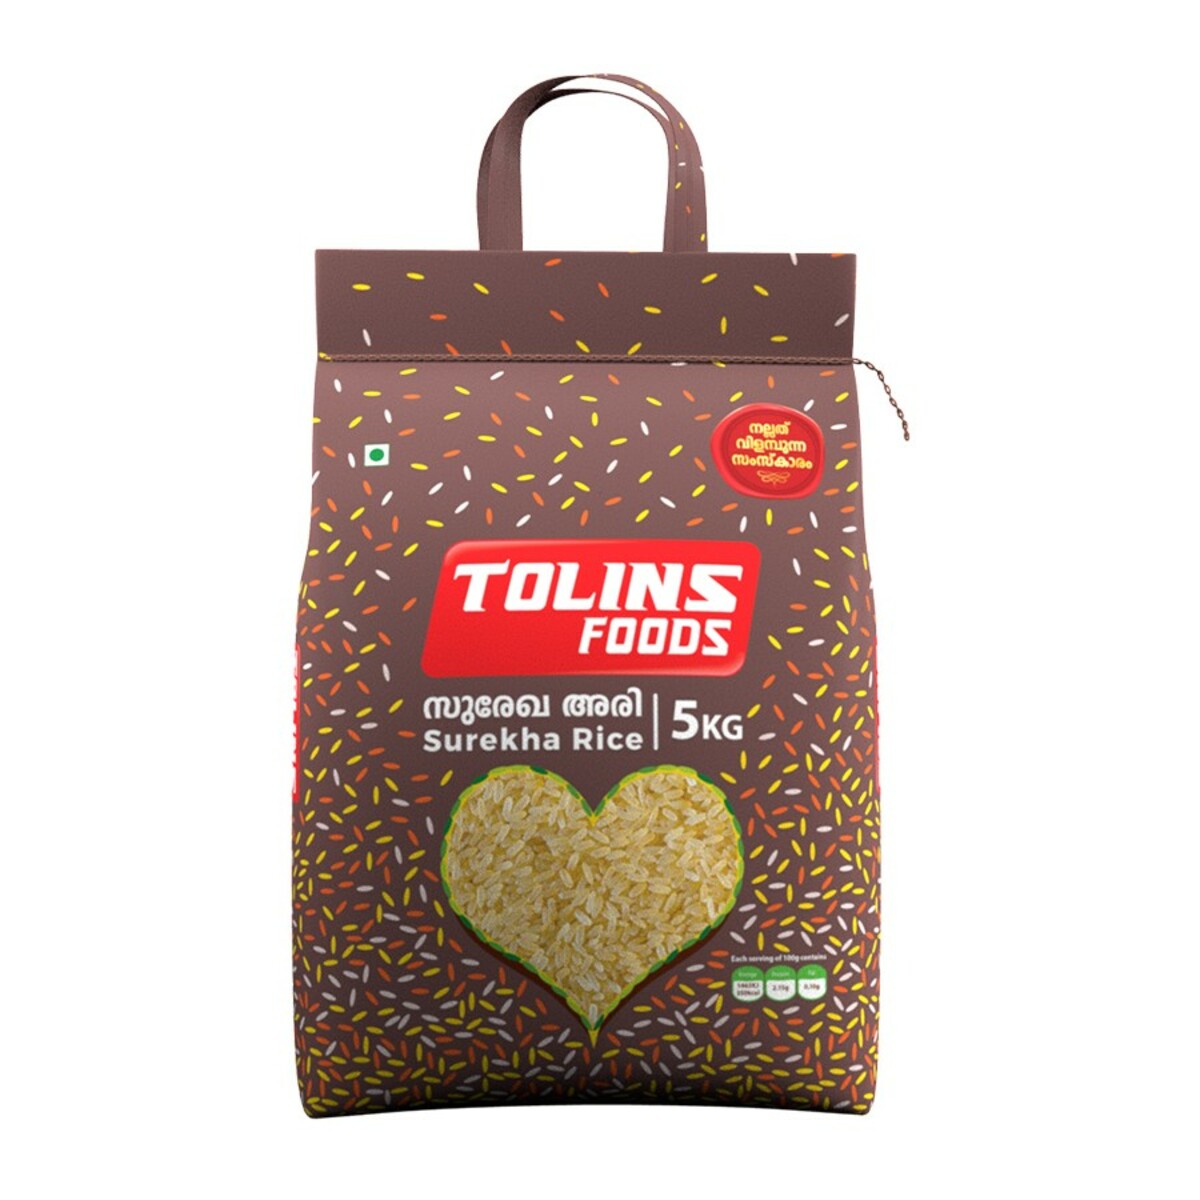 Tolins Foods Surekha Rice 5kg